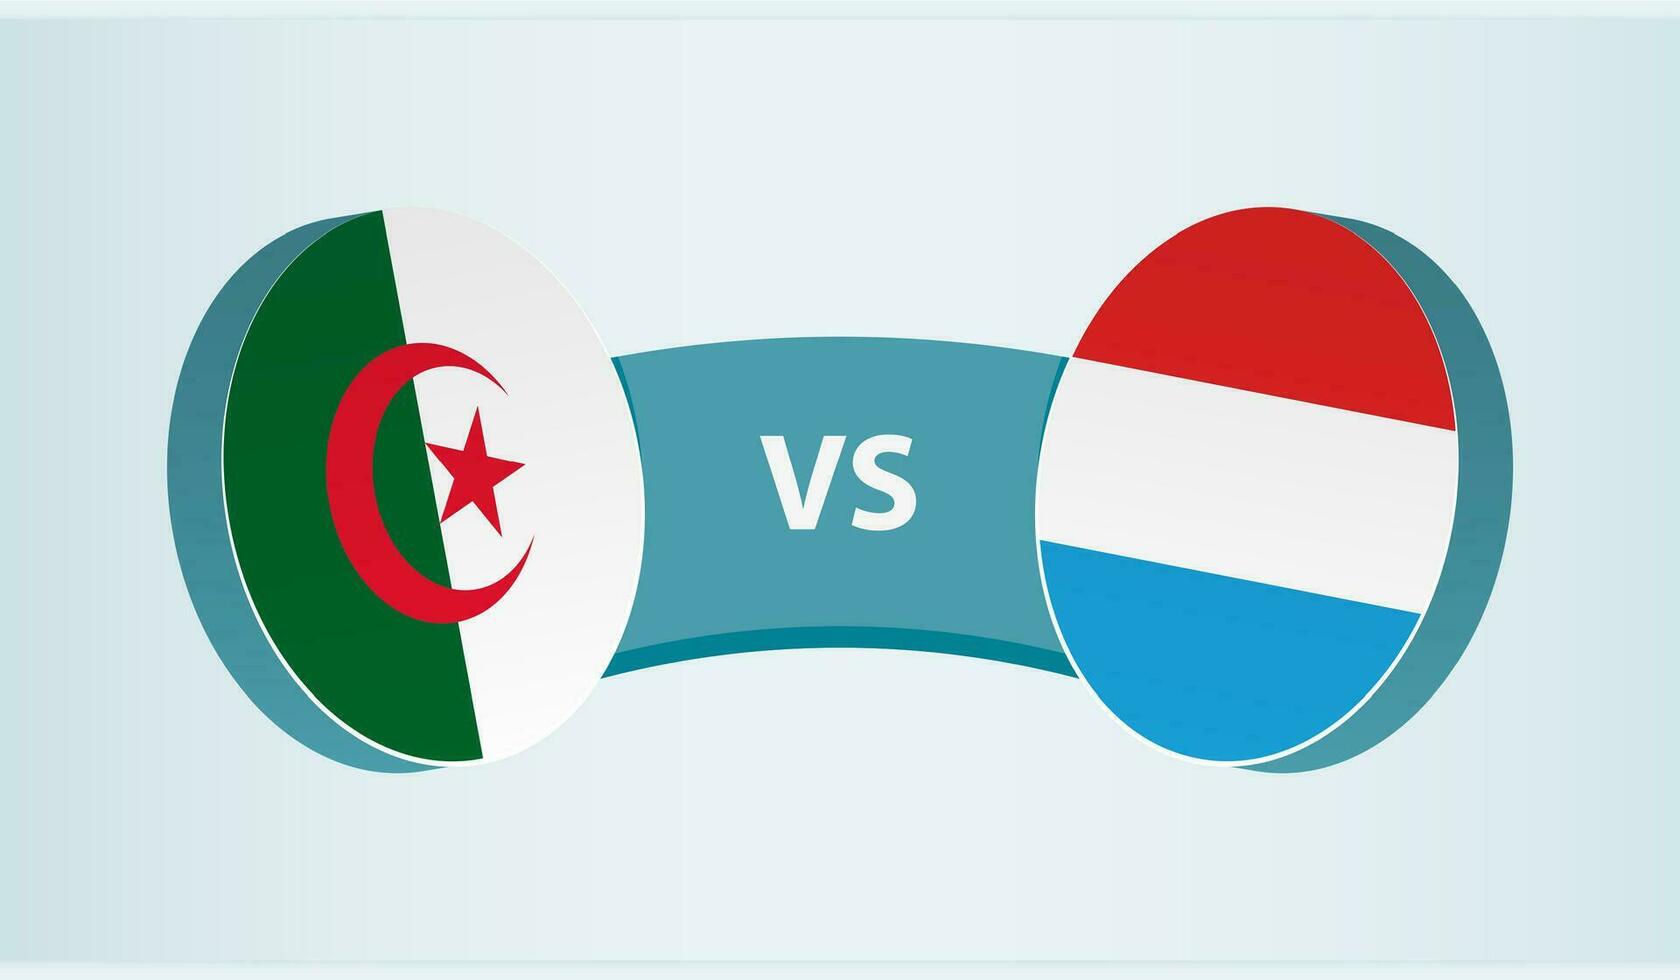 Algeria versus Luxembourg, team sports competition concept. vector